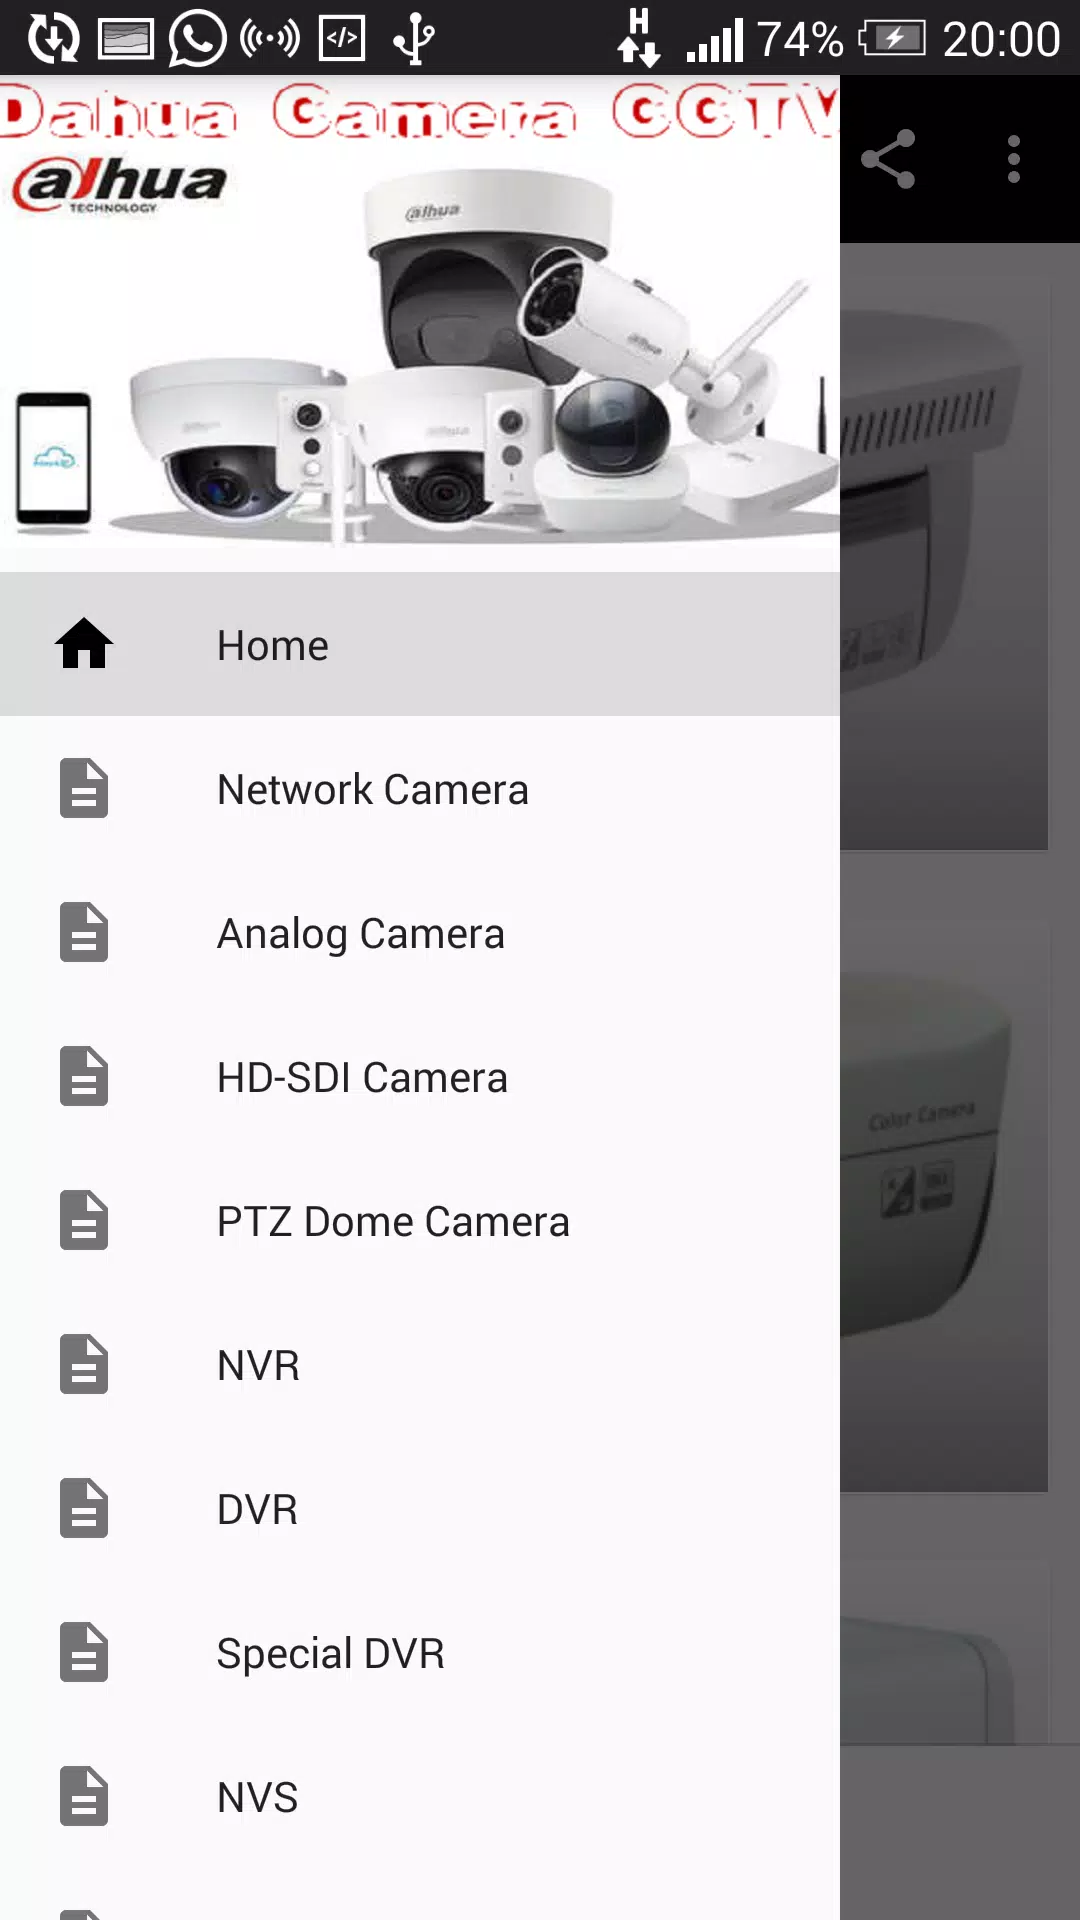 Dahua Camera CCTV APK for Android Download